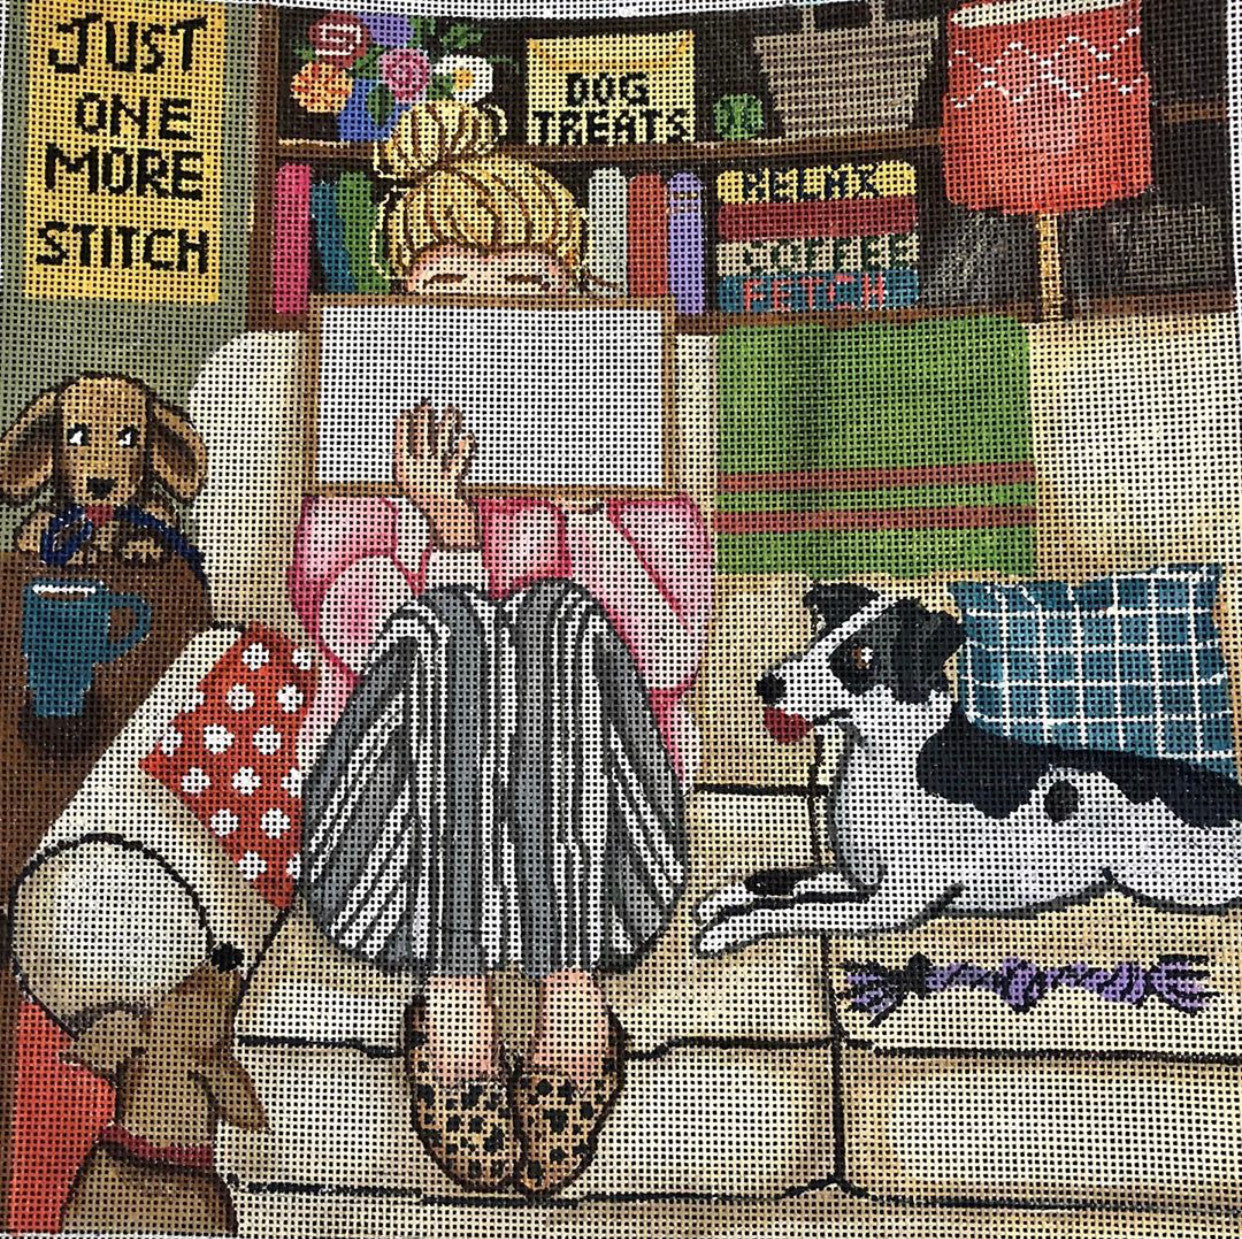 Gayla Elliott GEP309  Stitching Girl with Dogs